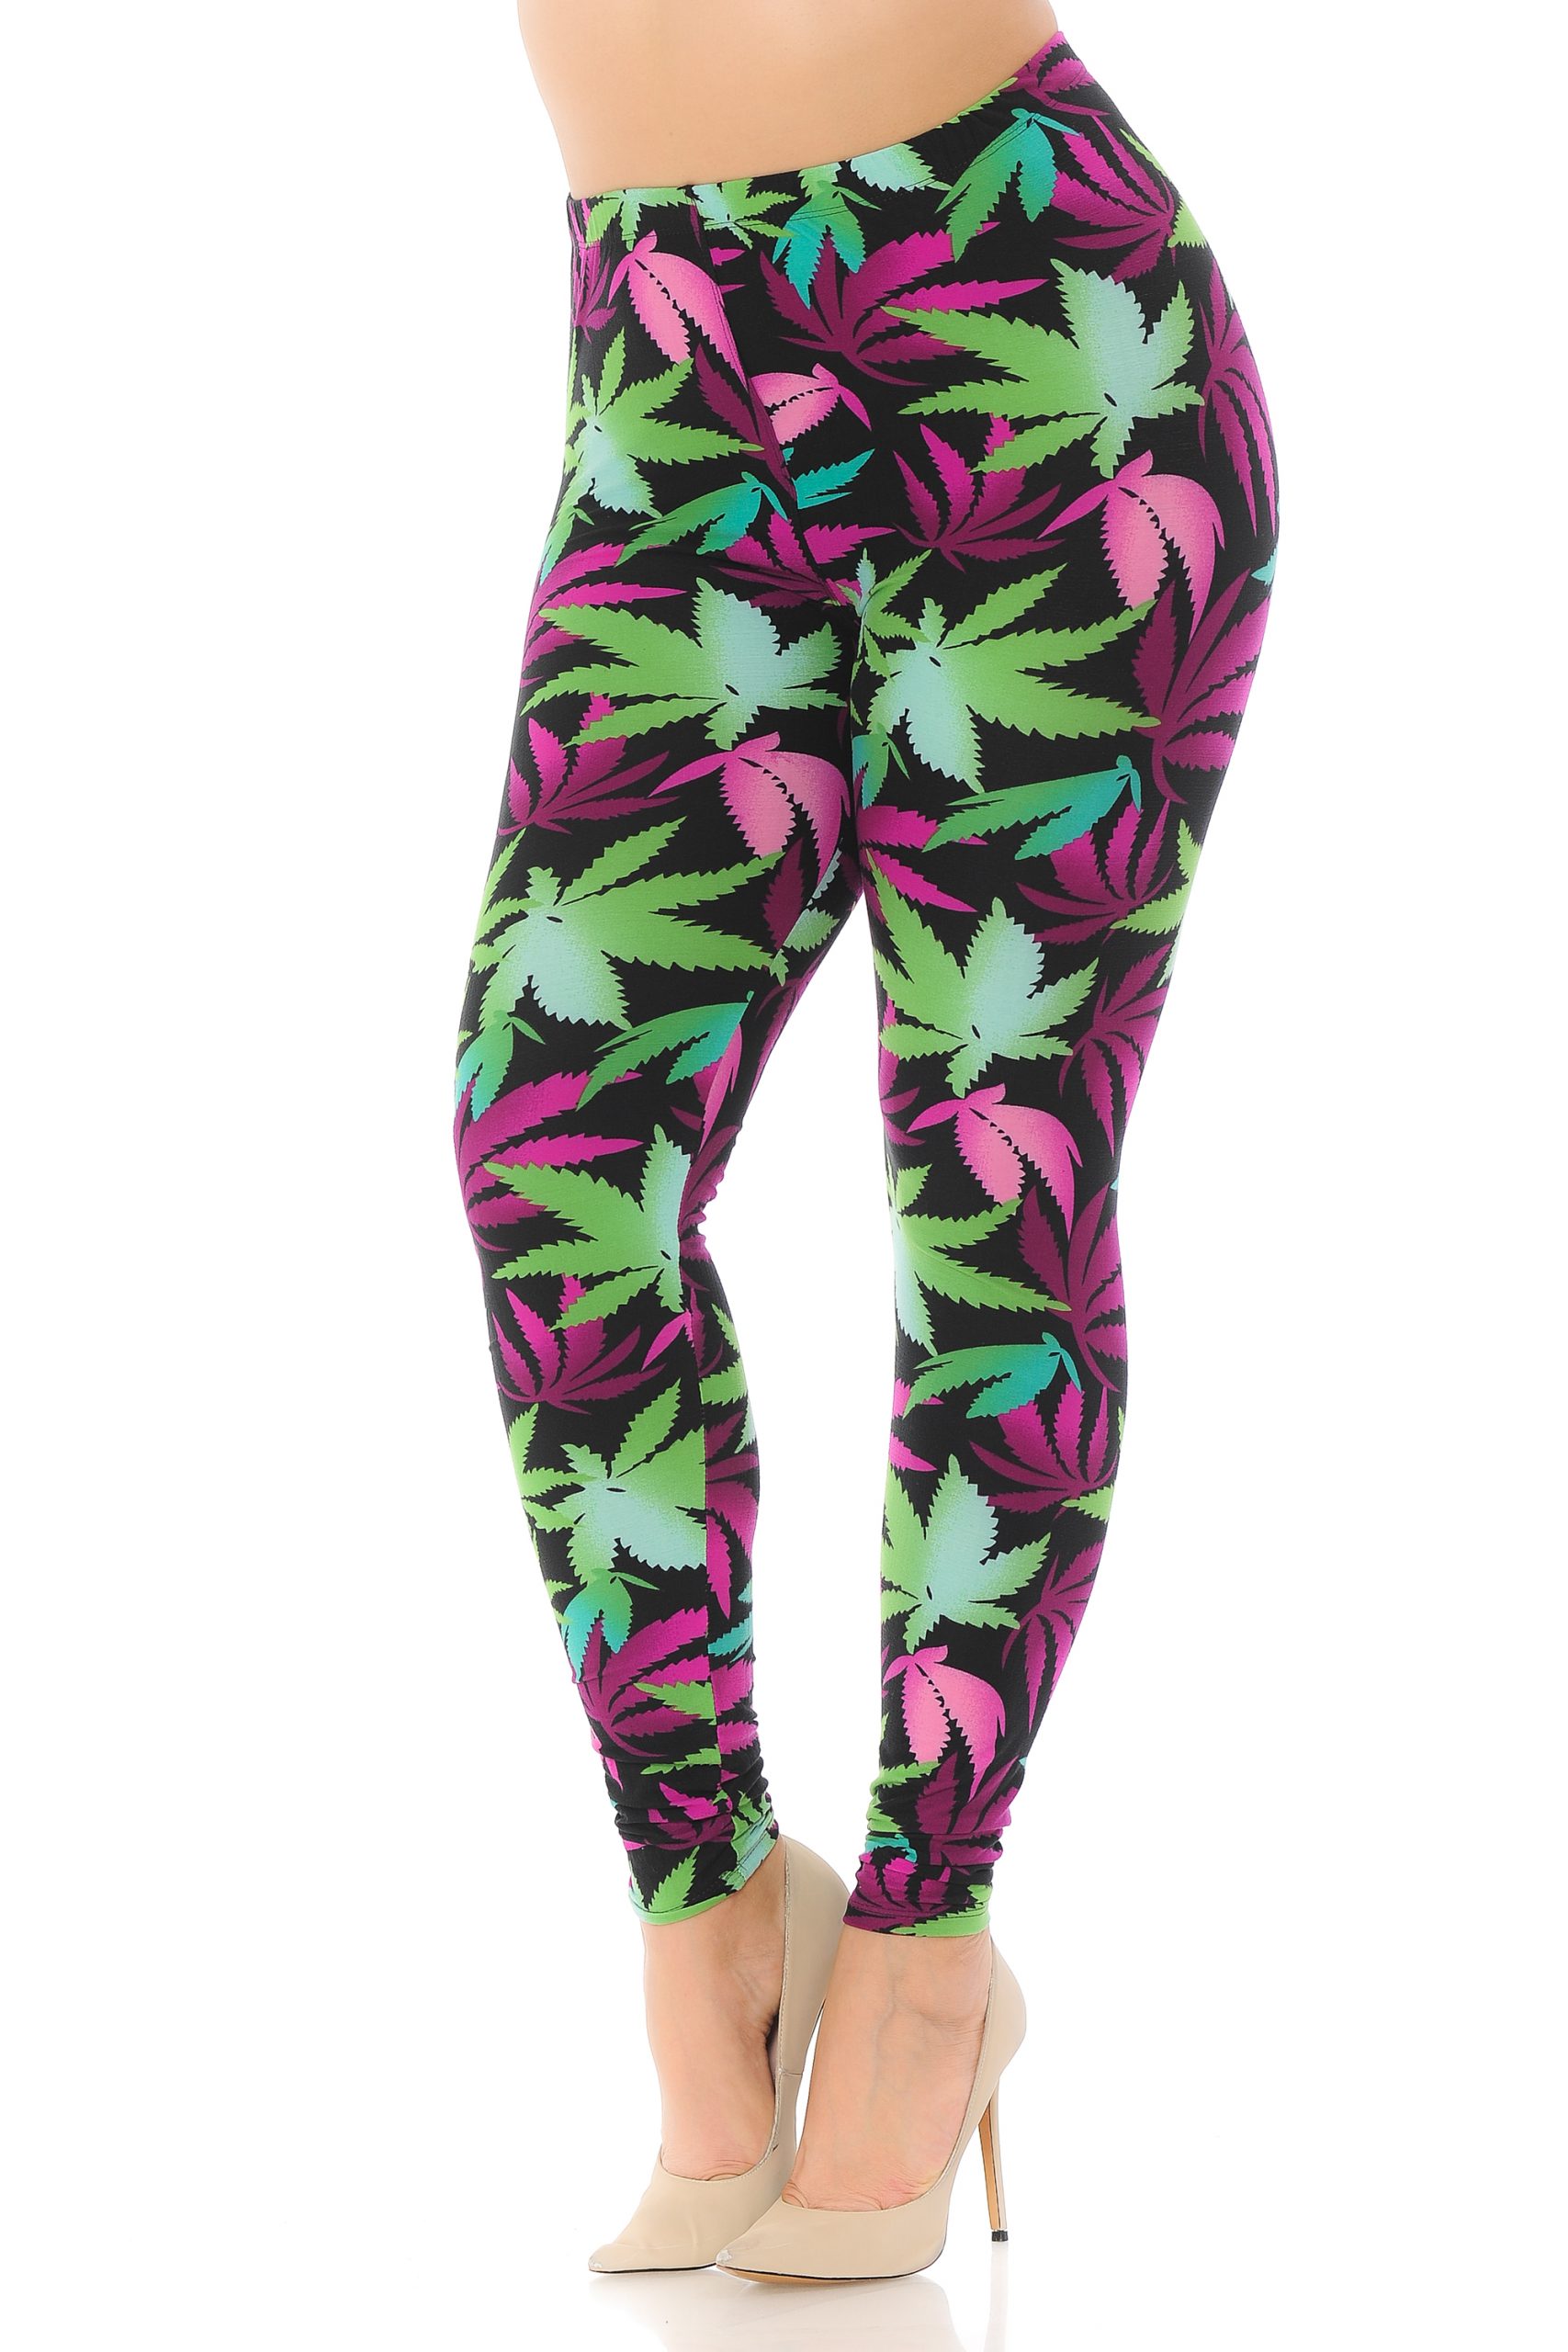 Purple and Green Multi Color Marijuana Leaf Buttery Soft Cannabis Leggings - Plus Size - 1